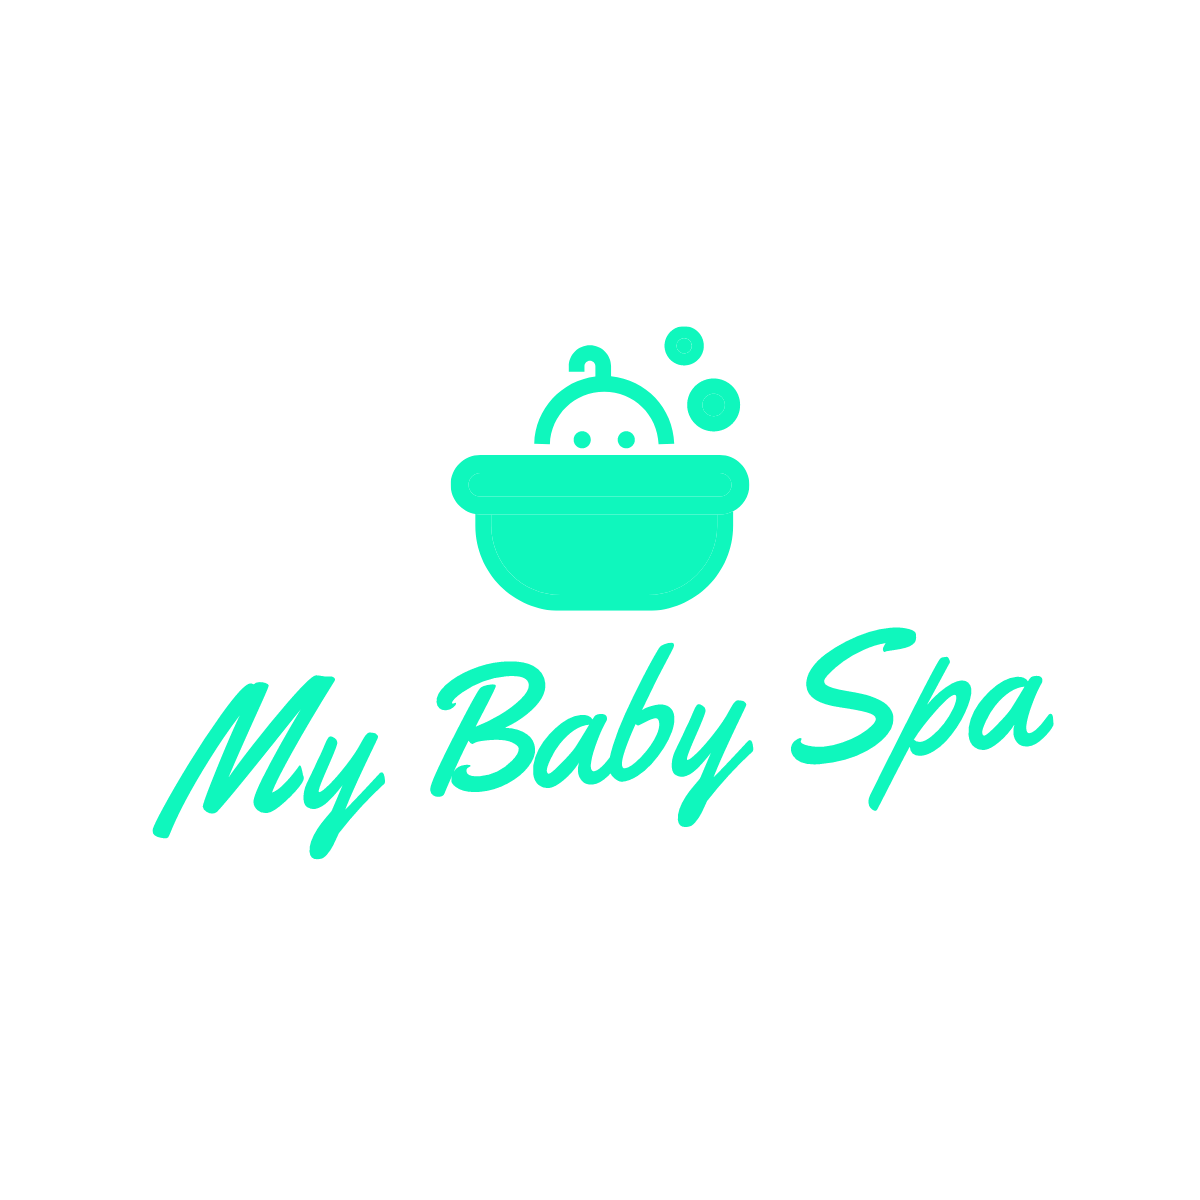 My Baby Spa's logo